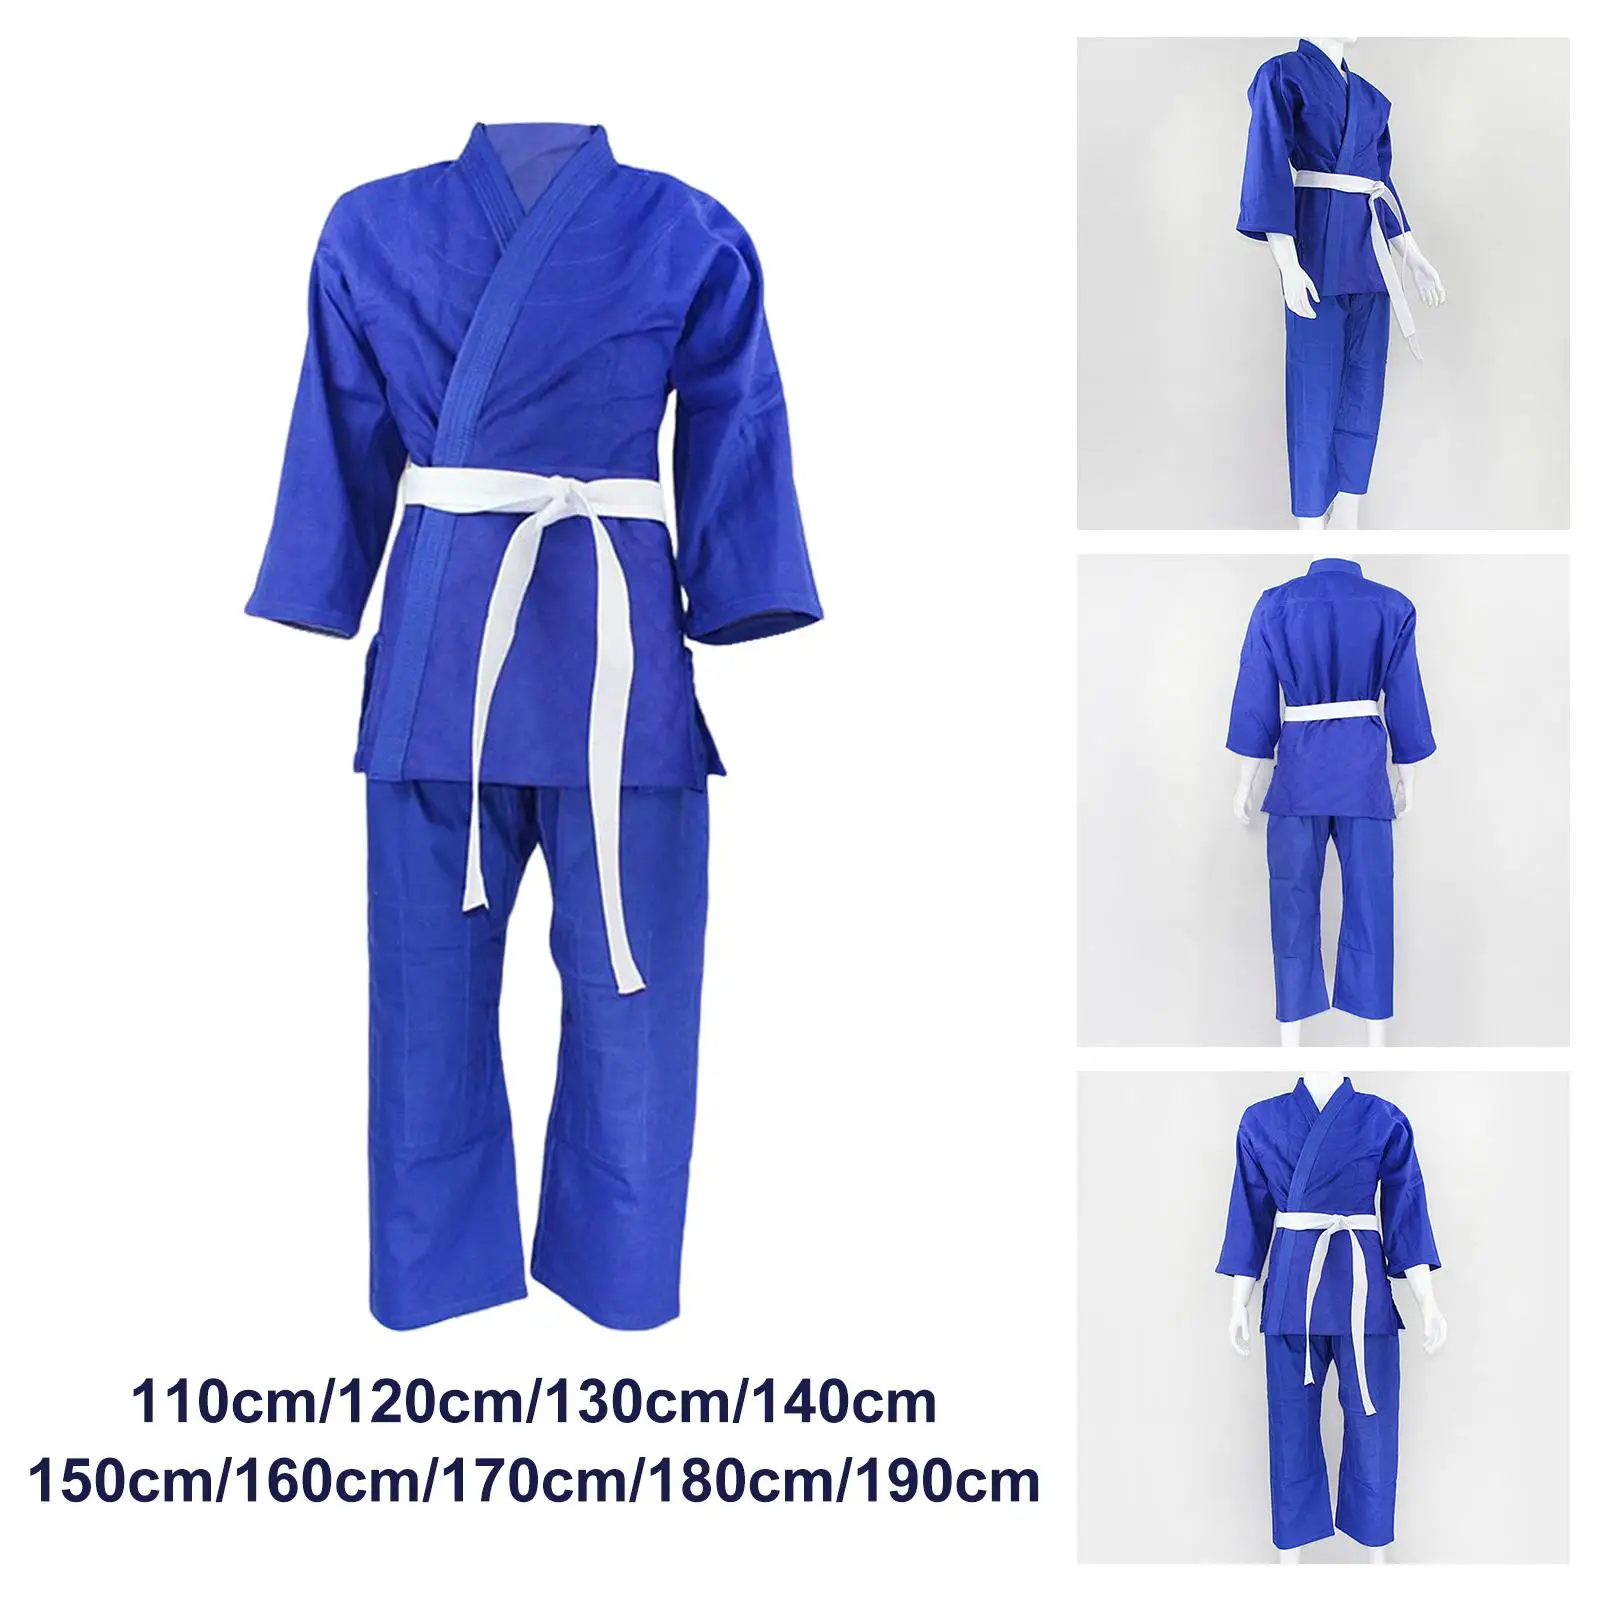 Jiu Jitsu Uniform Arts Stage Performance Belt Costumes Karate Uniform for Men Adults Professionals Kids Professional Competition